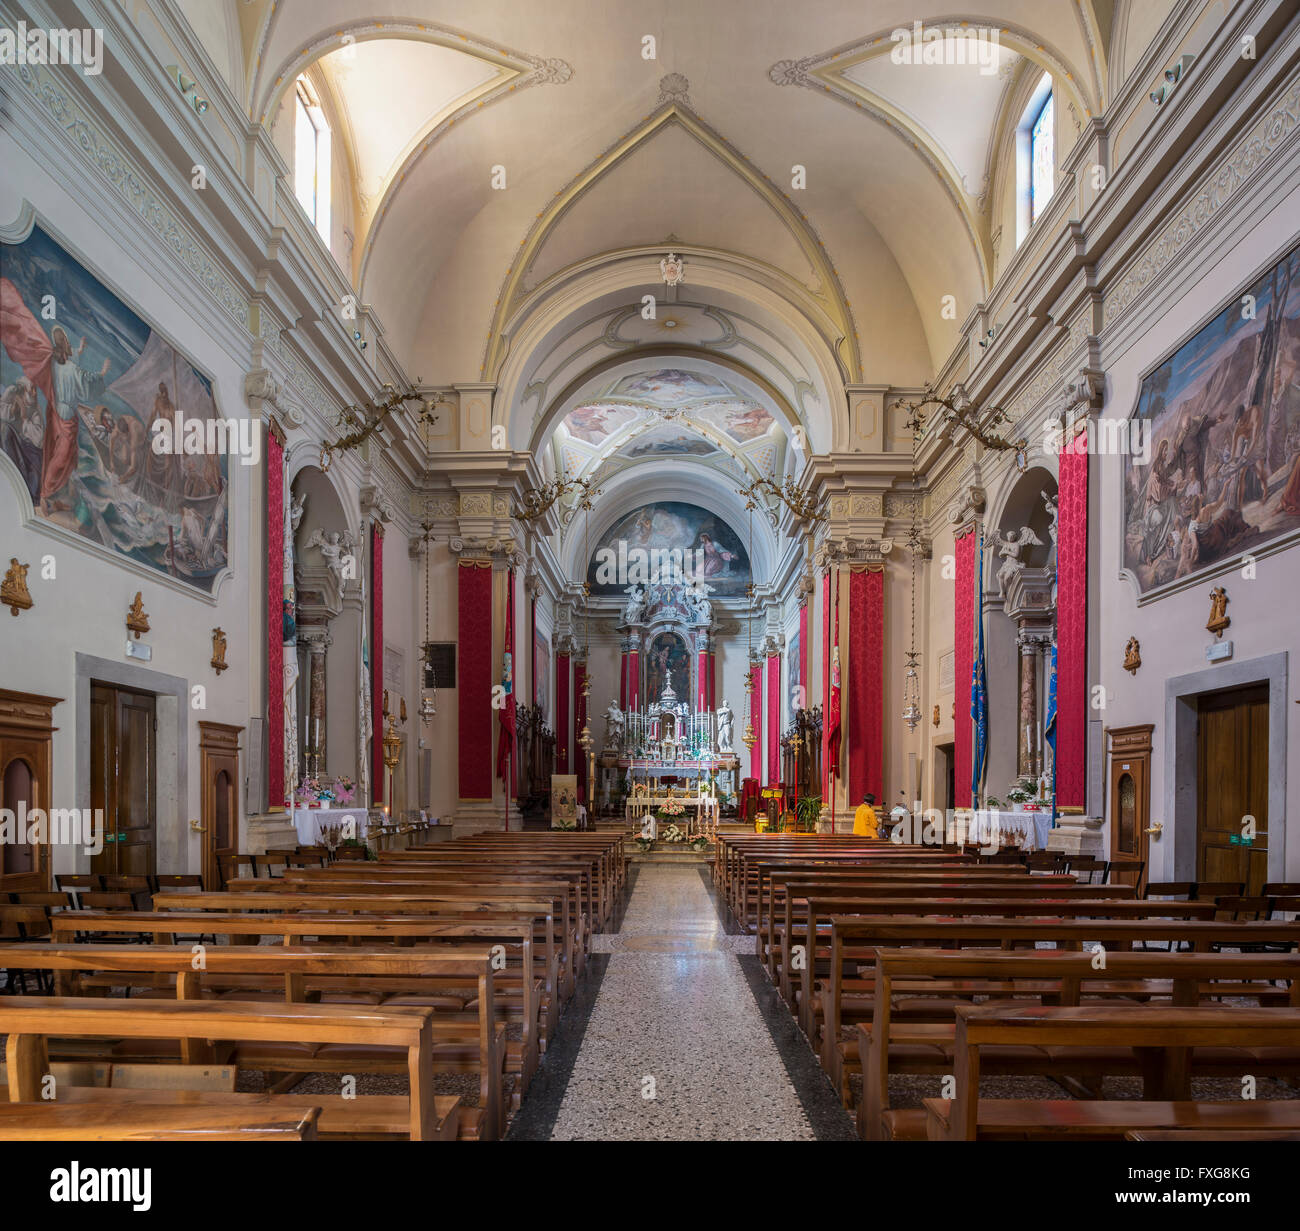 Interior, Church of San Martino, 18th century, Marano Lagunare, Udine province, Friuli-Venezia Giulia, Italy Stock Photo